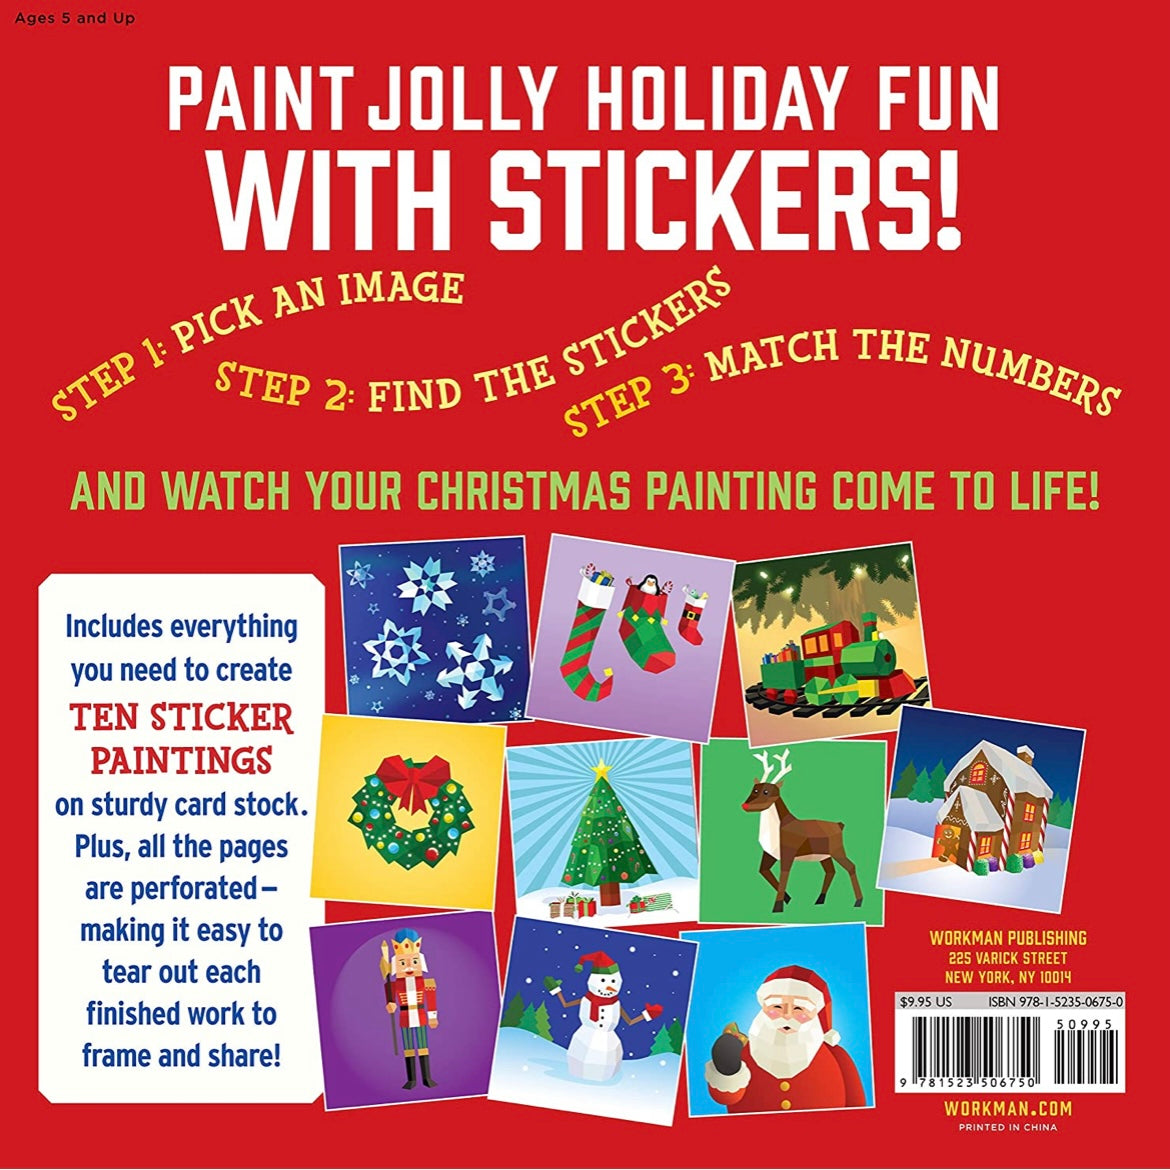 Paint By Sticker Kids Book